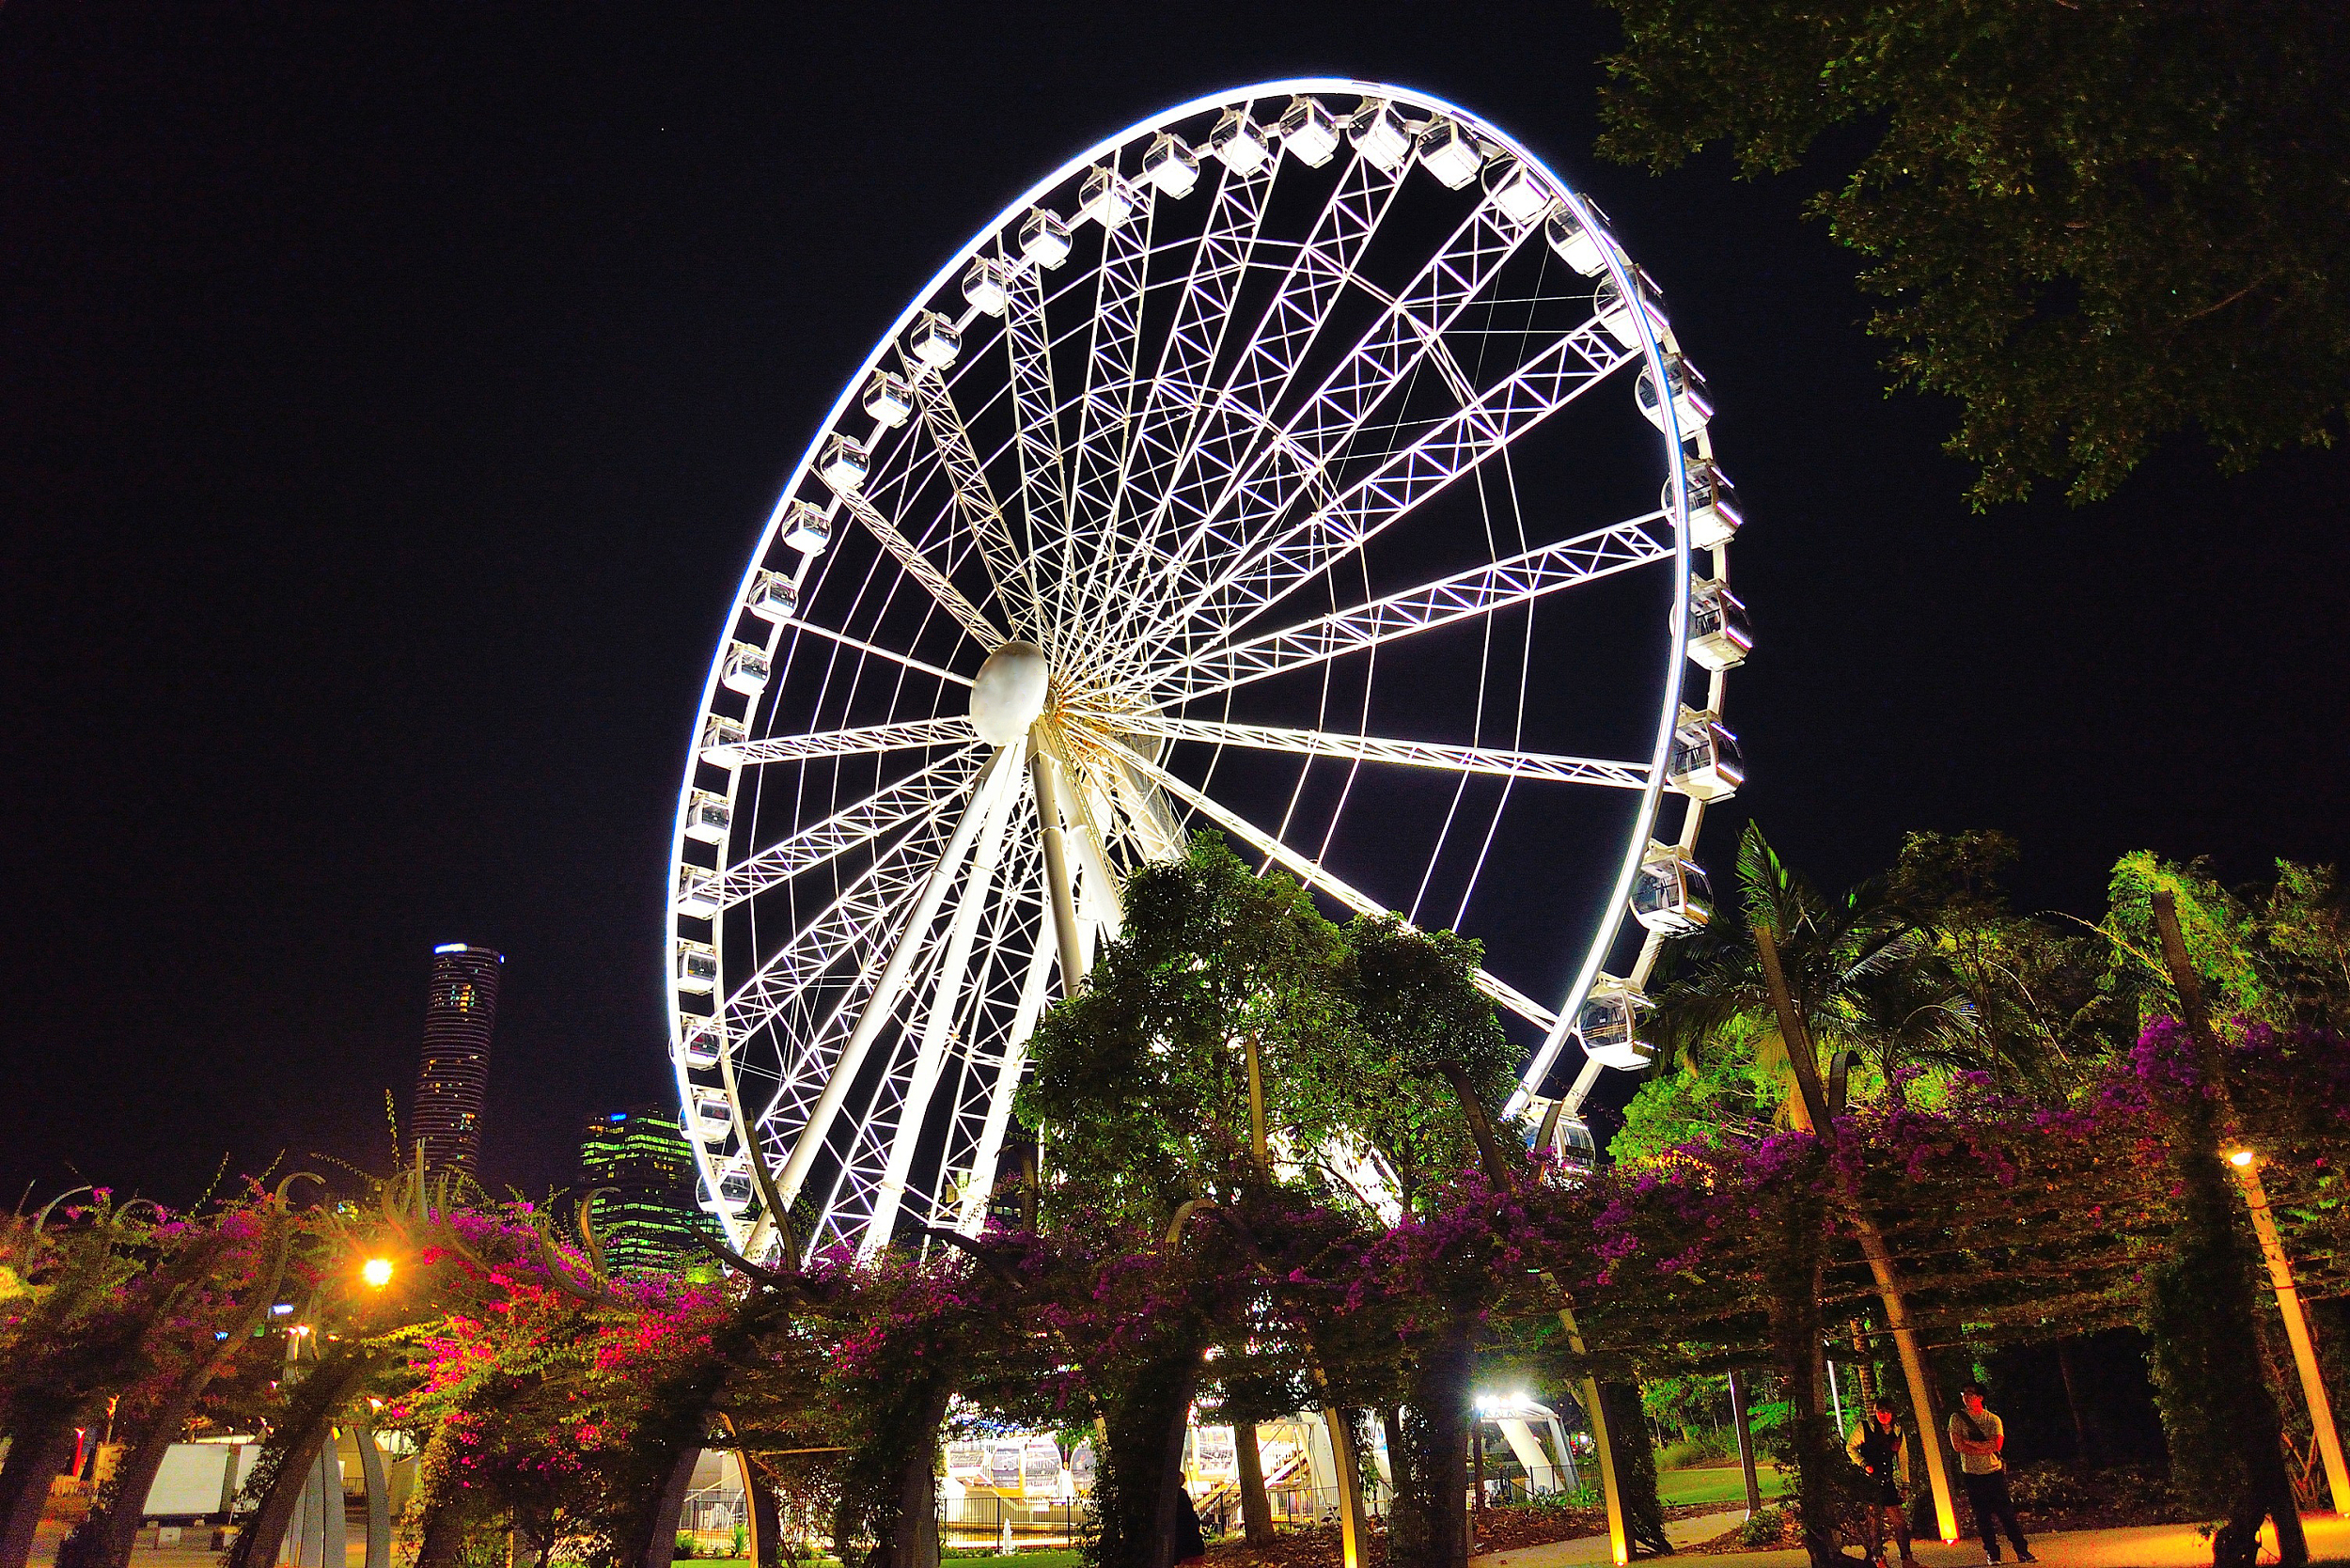 The Wheel of Brisbane  Iconic Ferris Wheel Breathtaking Views